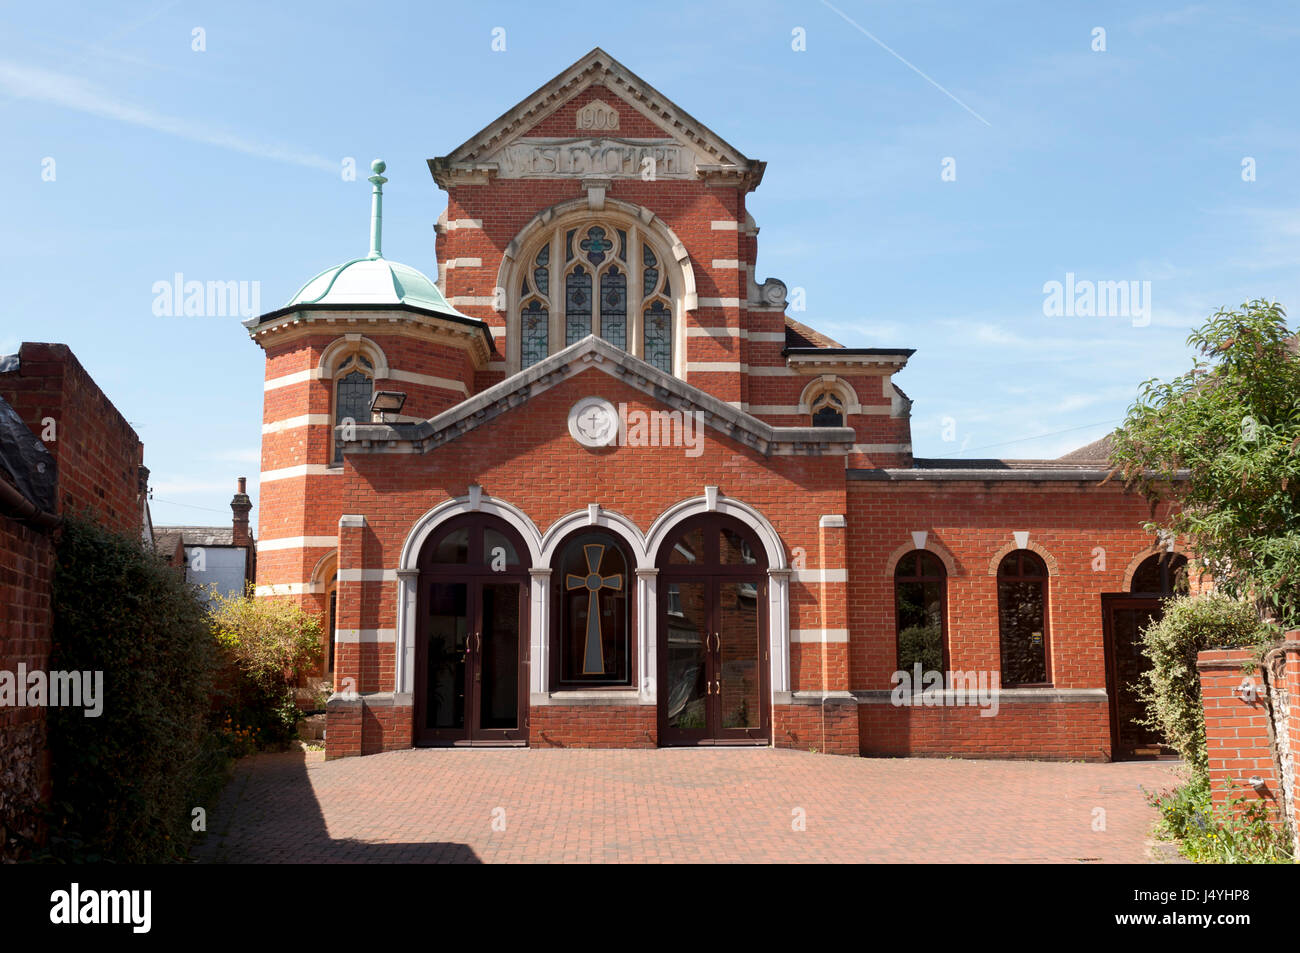 The Methodist church, Marlow, Buckinghamshire, England, UK Stock Photo